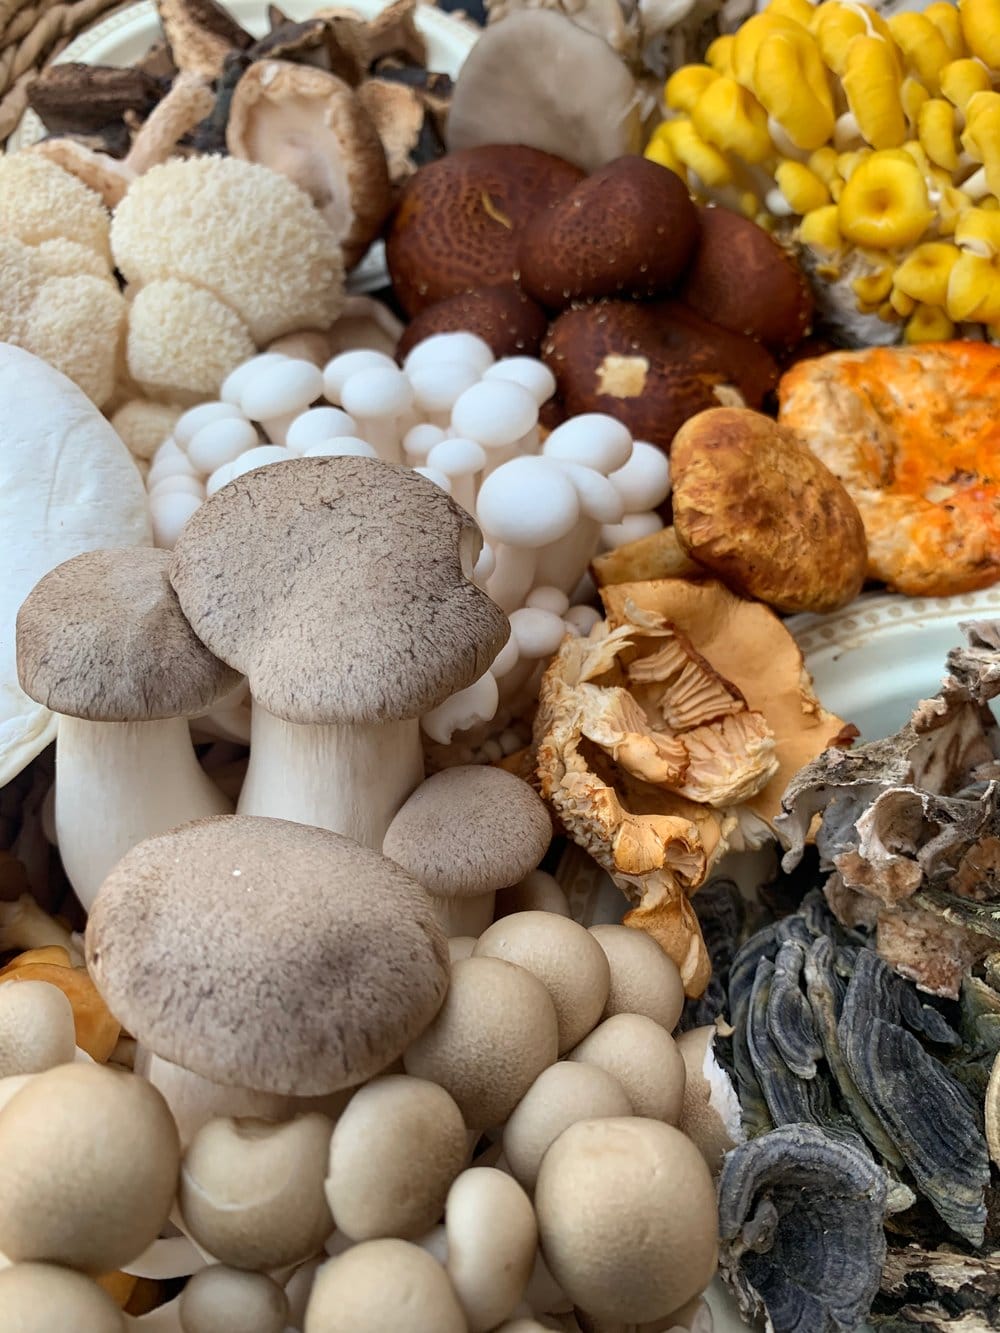 The Most Popular Magic Mushrooms